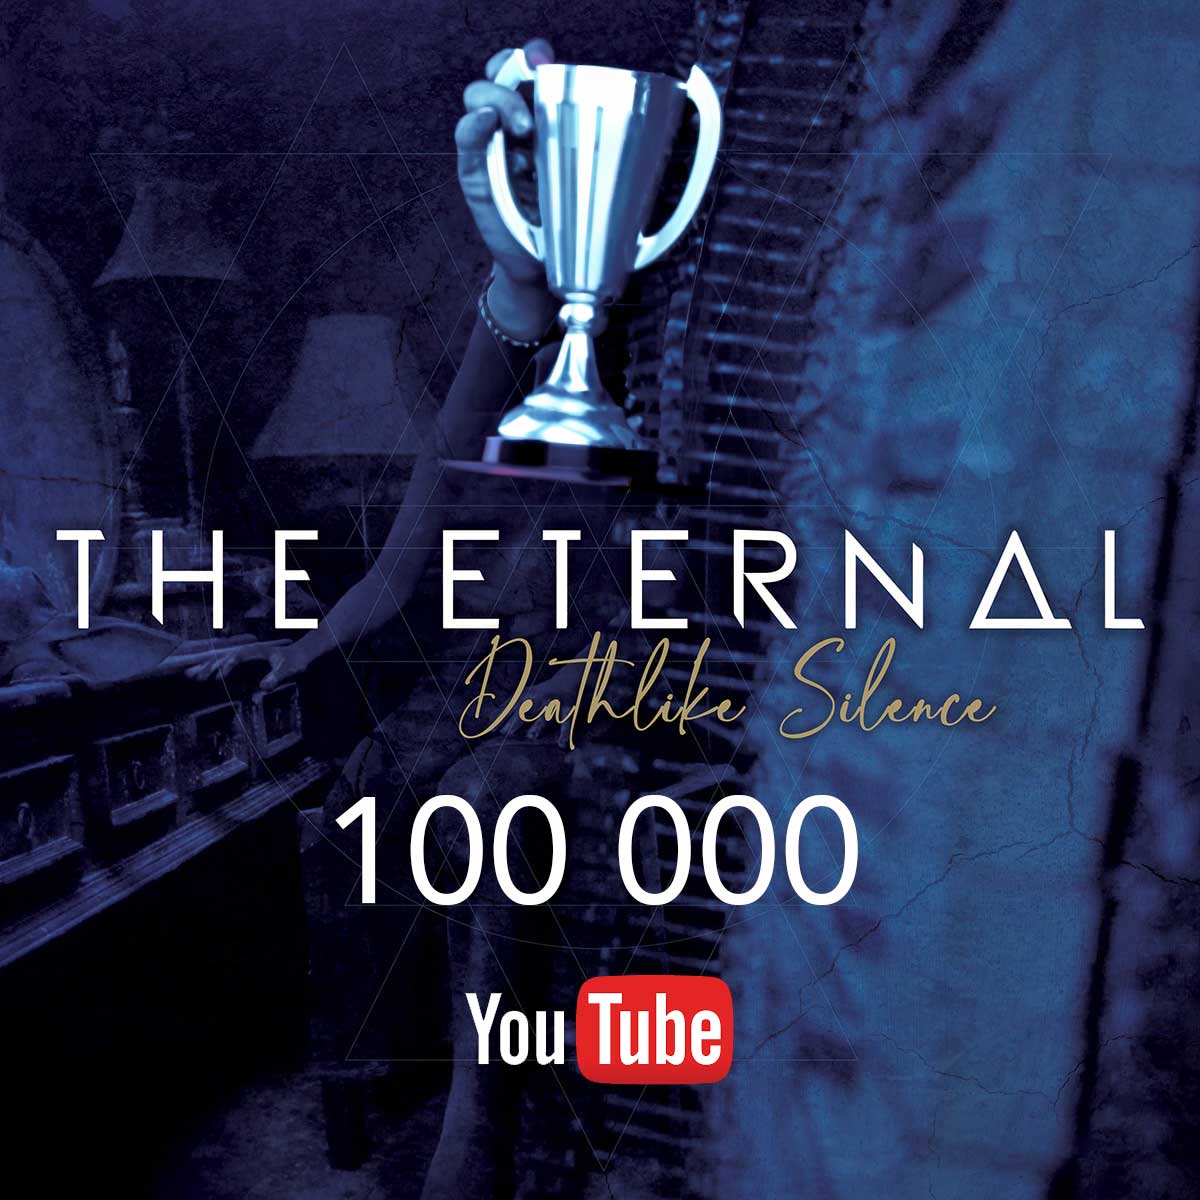 Deathlike Silence passes 100 000 views on Youtube